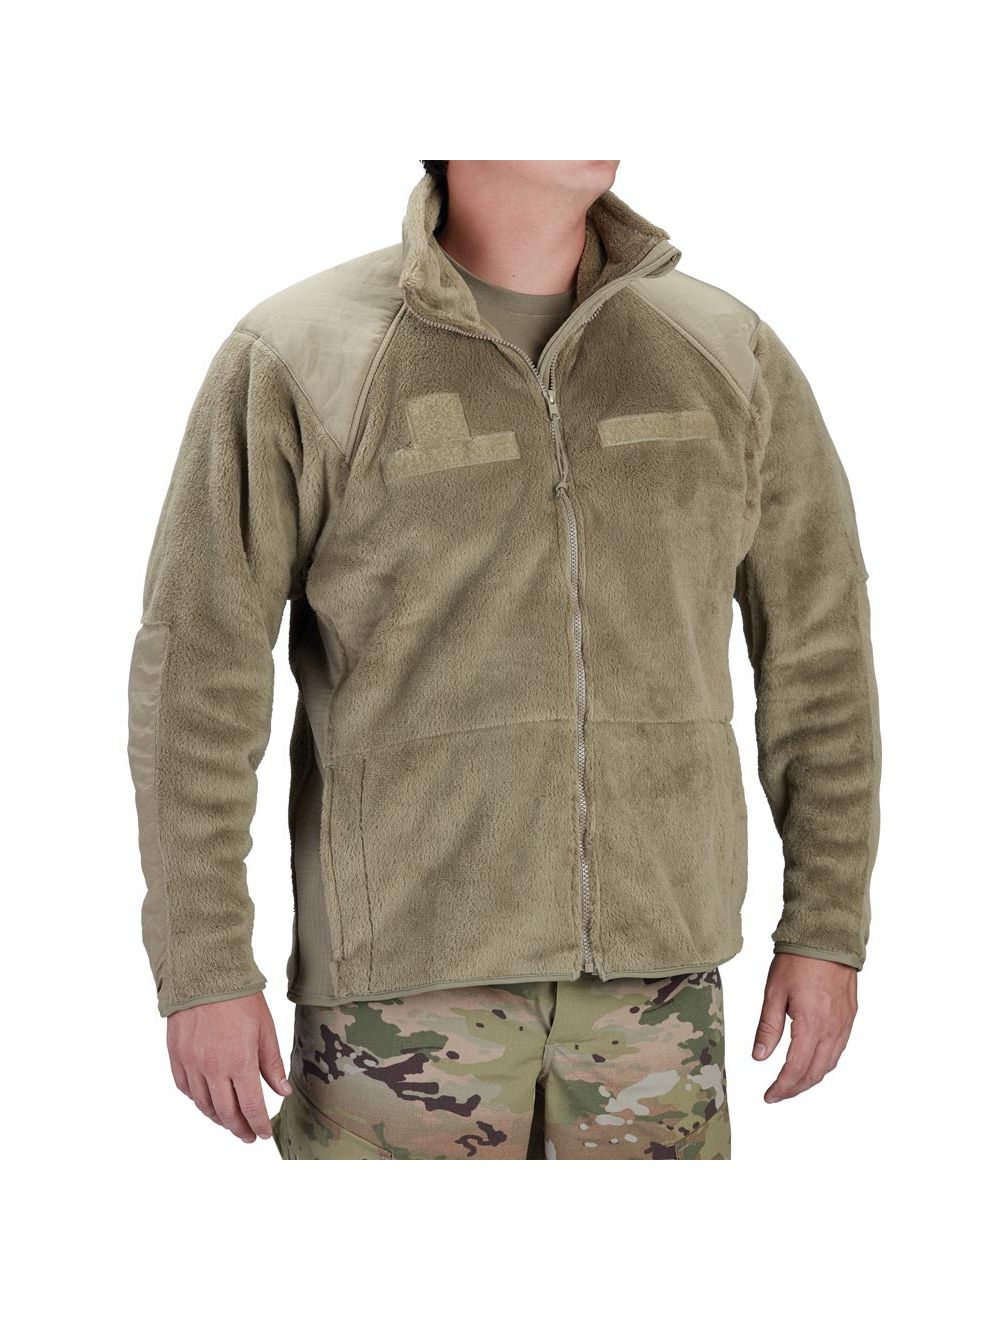 Us Army Ecwcs Polartec 200 Jacket Ucp Military Fleece Jacket Foliage Green 